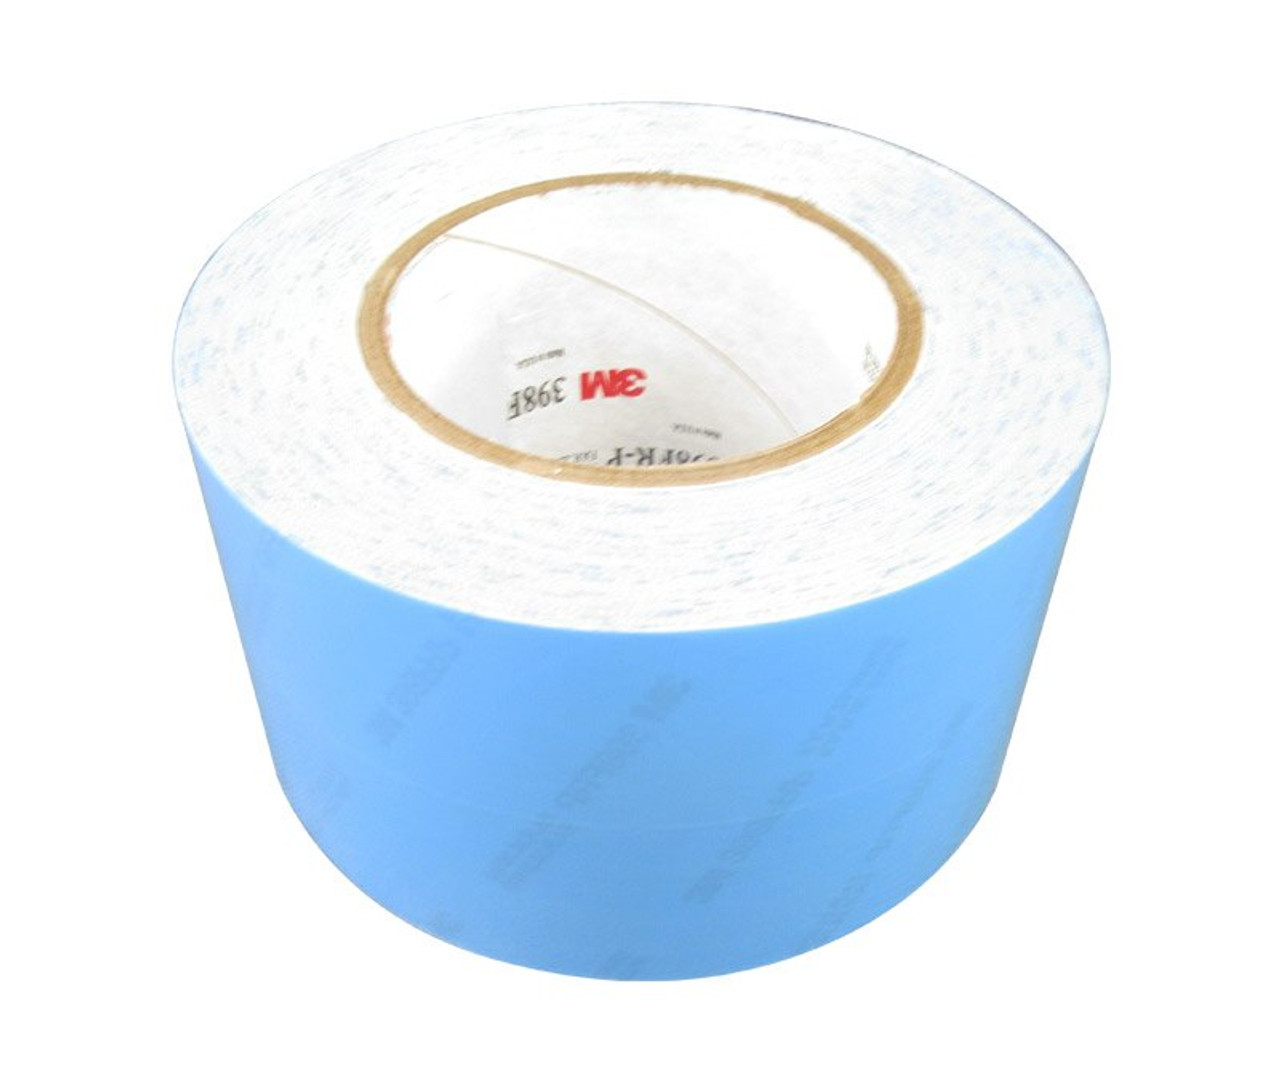 3M Glass Cloth Tape - White - 3 x 36 Yard Roll